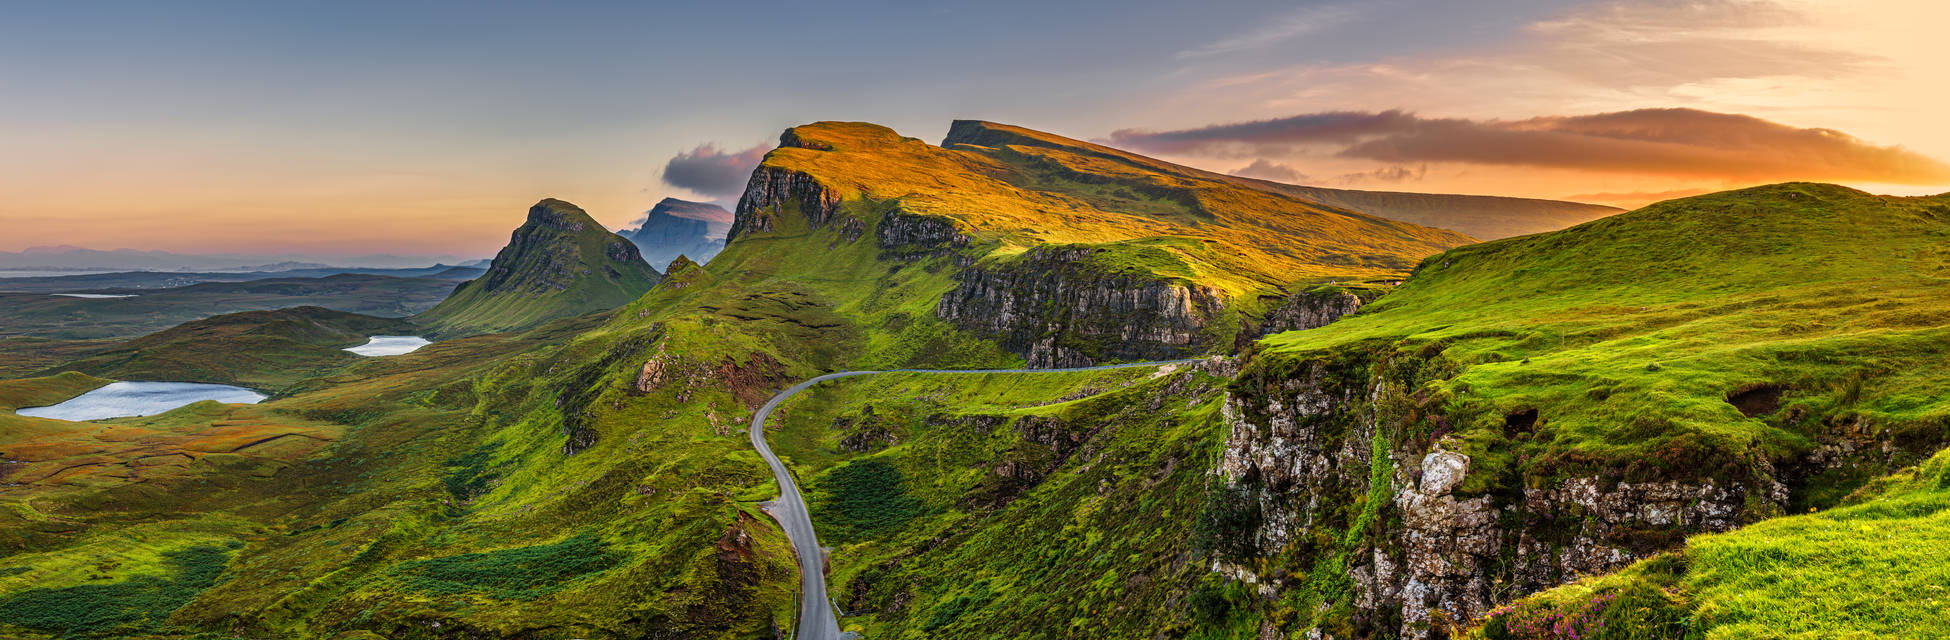 Schotland-Isle-of-Skye-AdobeStock_97183299.jpg